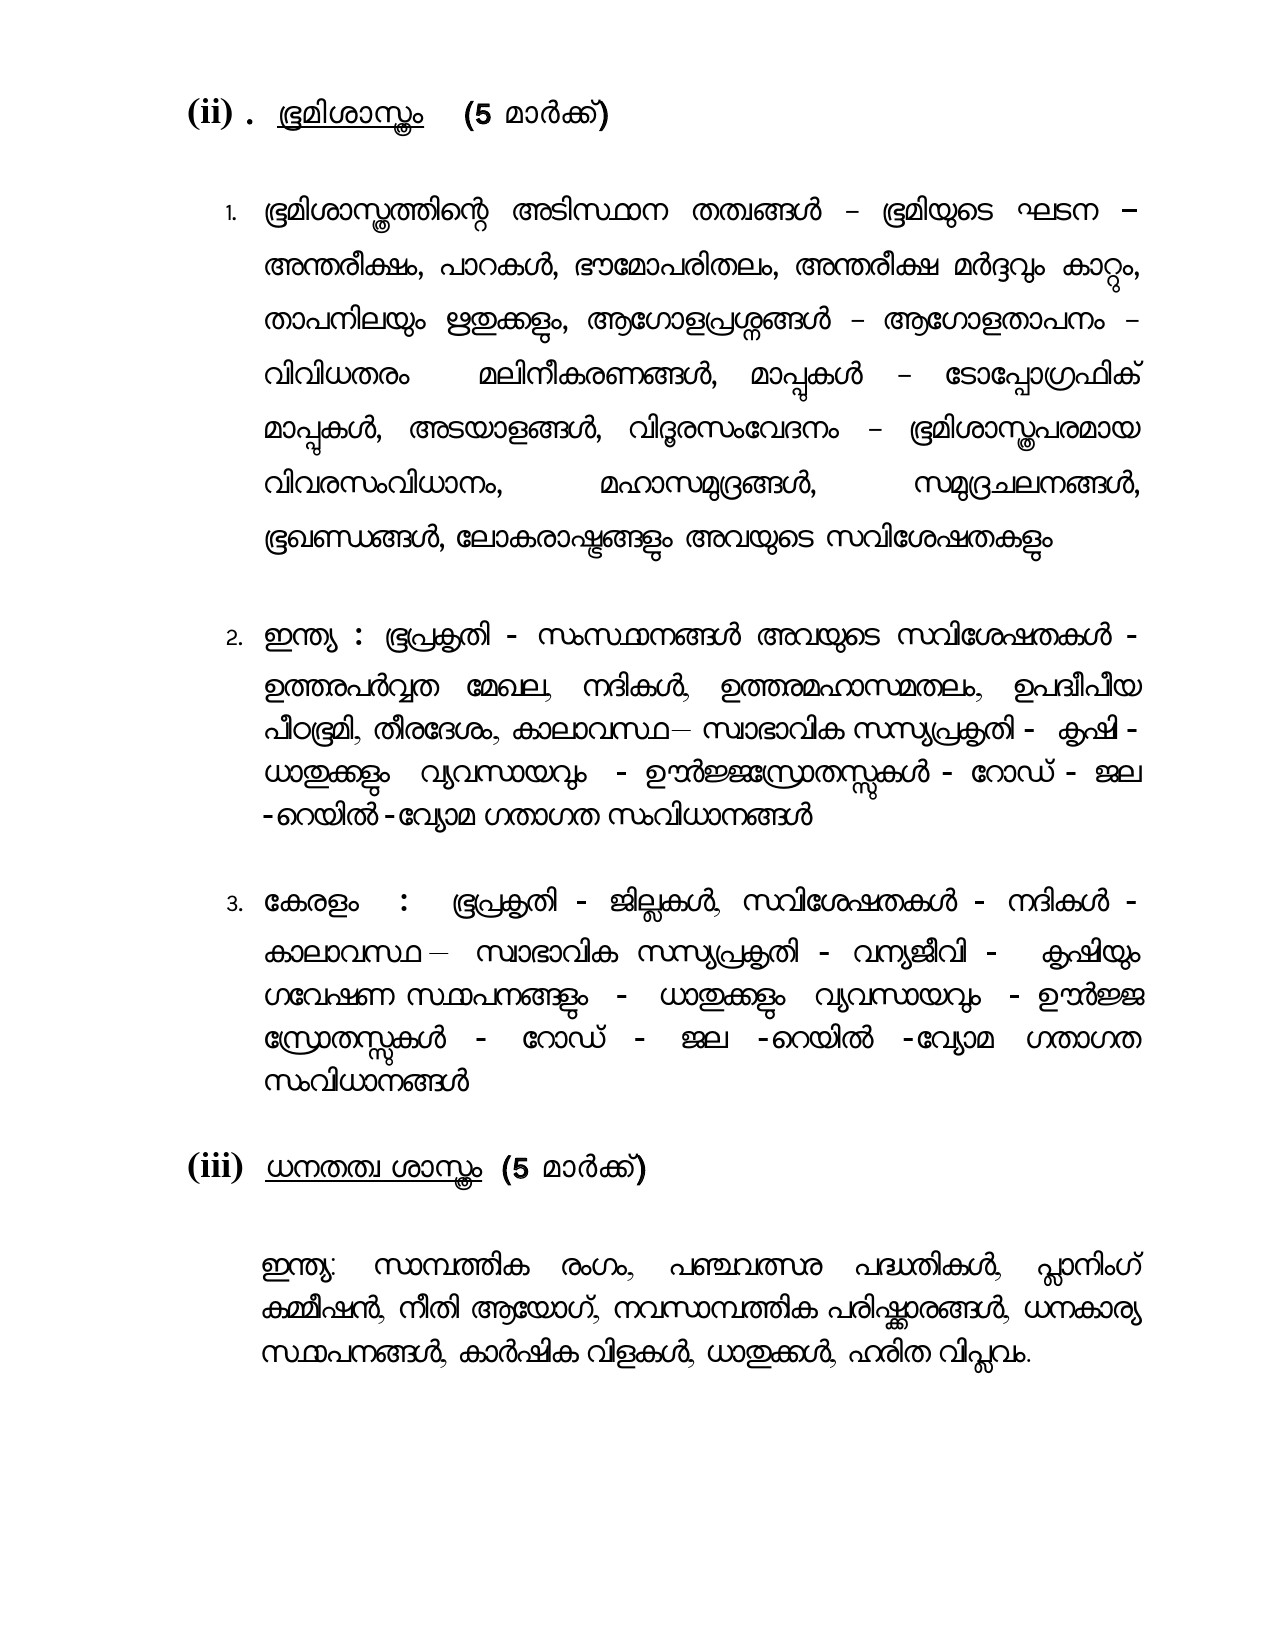 LDC Main Exam Syllabus Malayalam And English - Notification Image 3